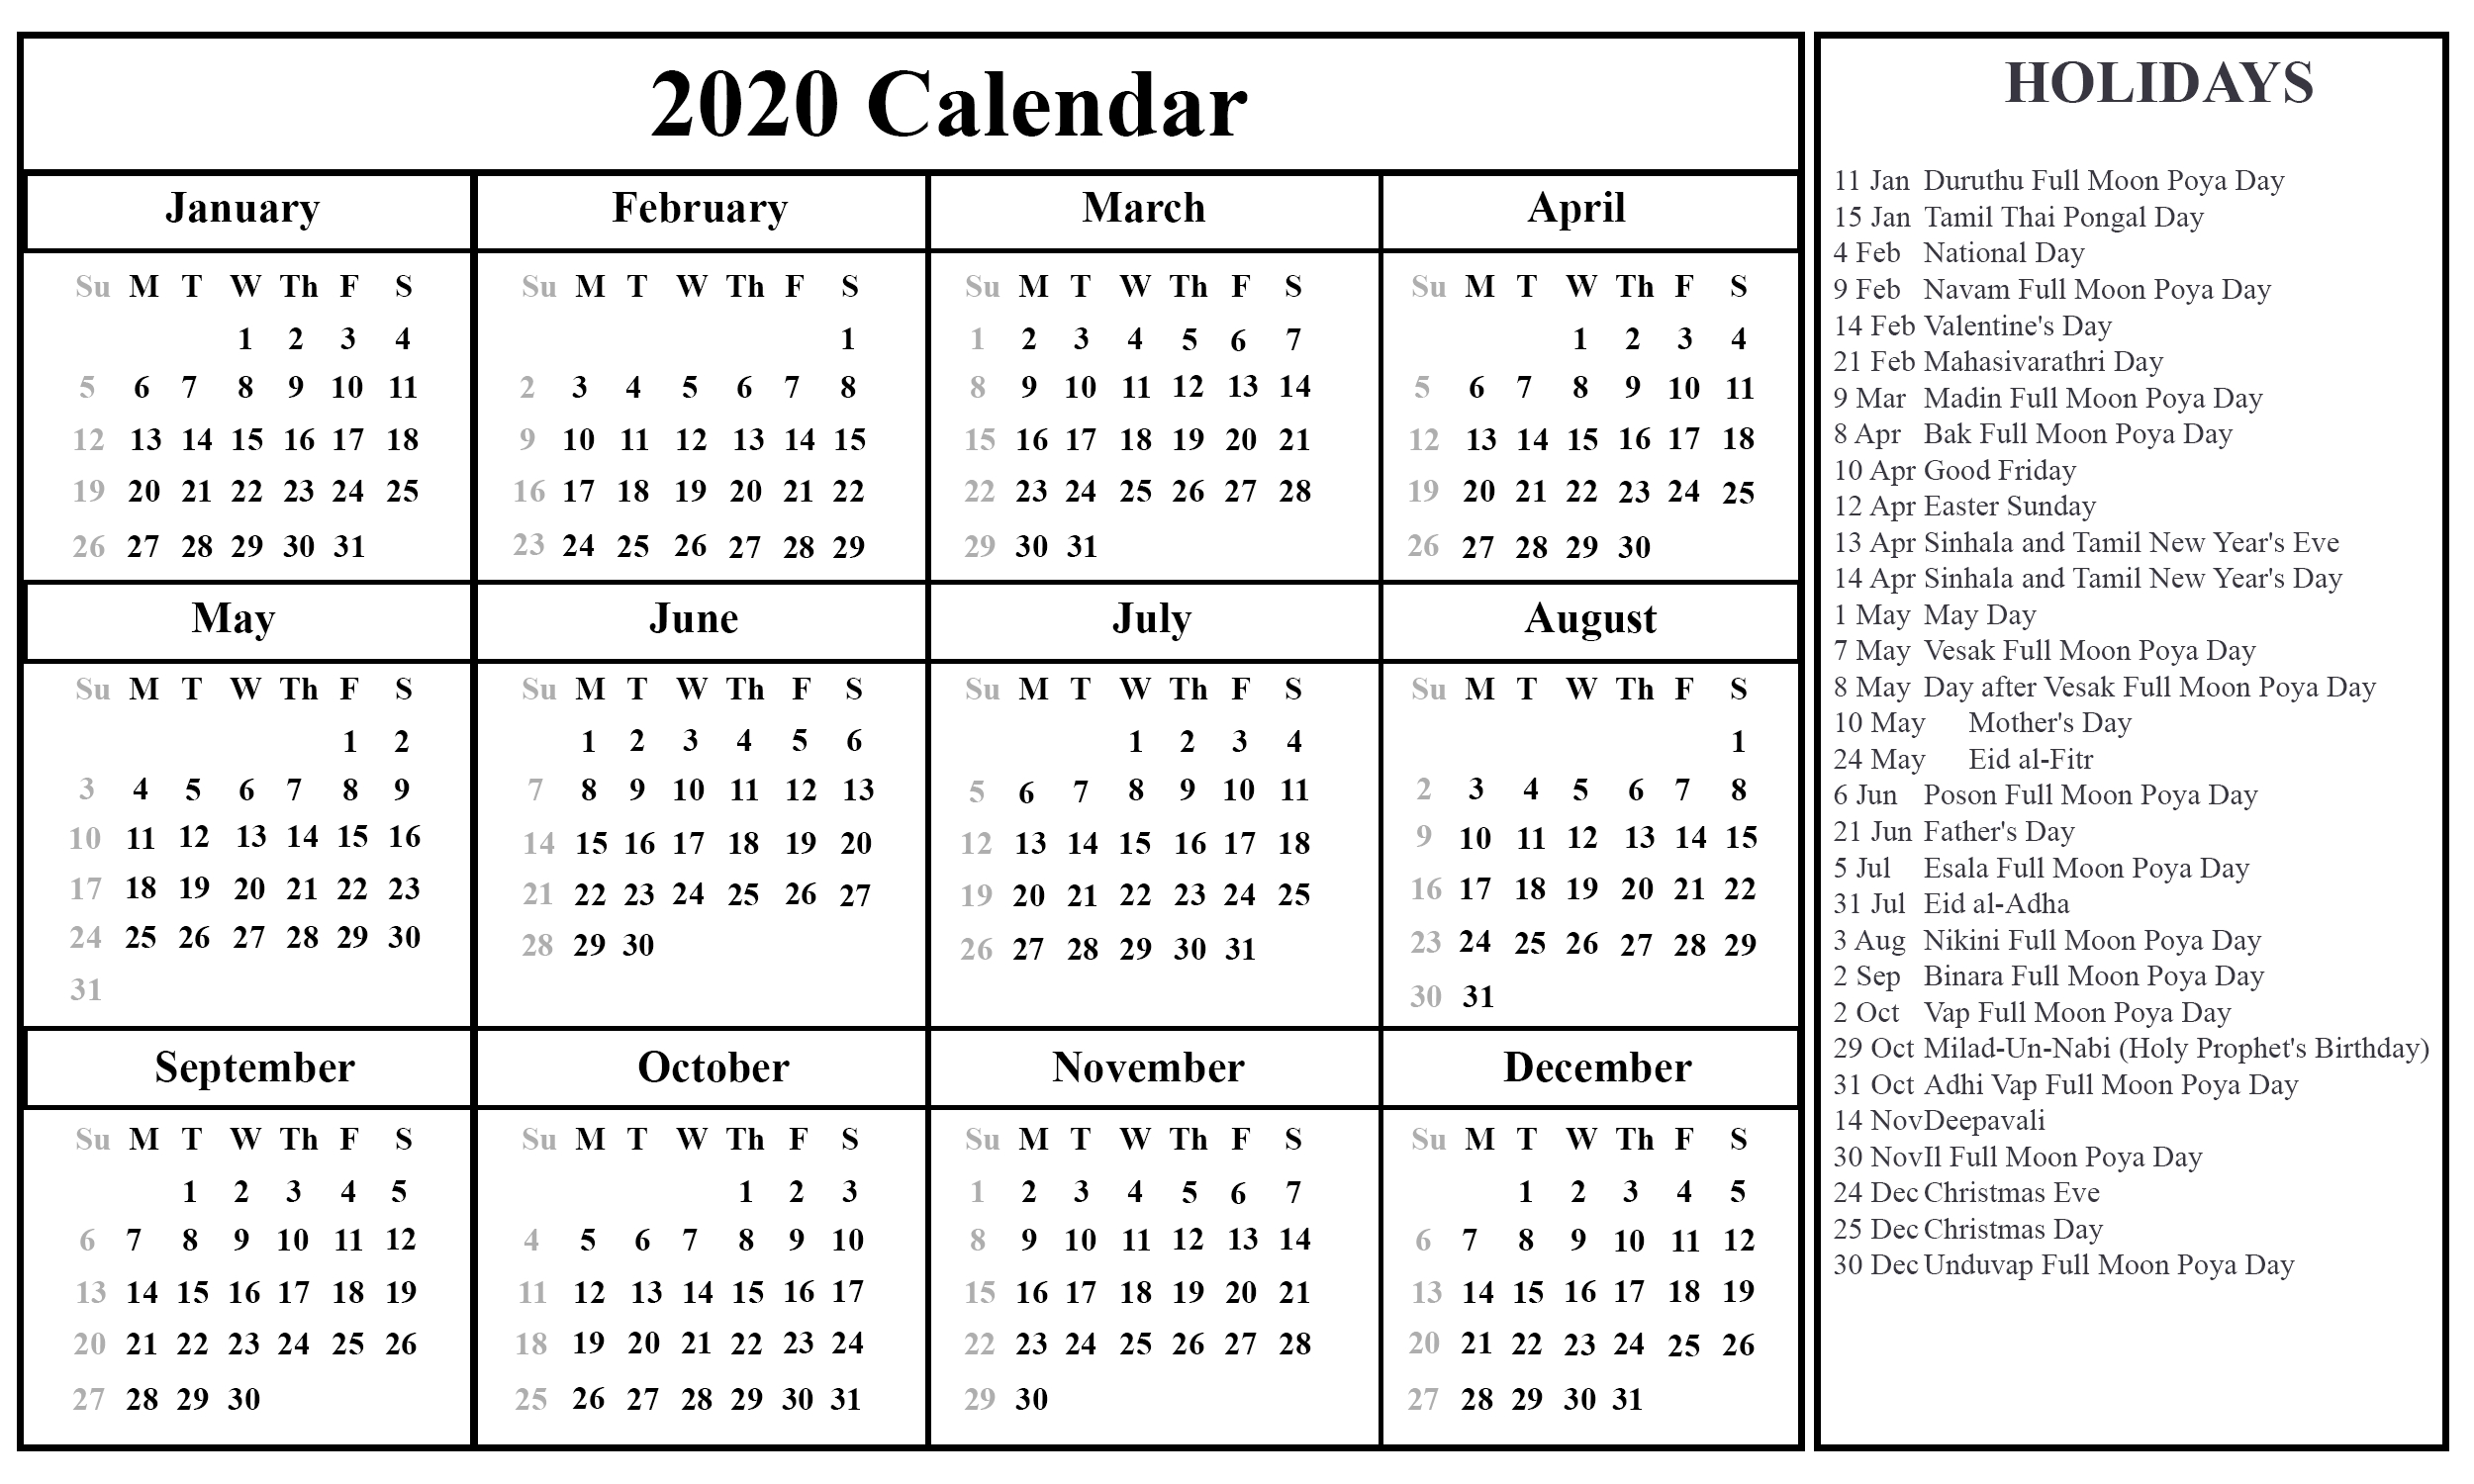 Free Printable Sri Lanka Calendar 2020 With Holidays In Pdf-2020 Islamic Calendar Holidays